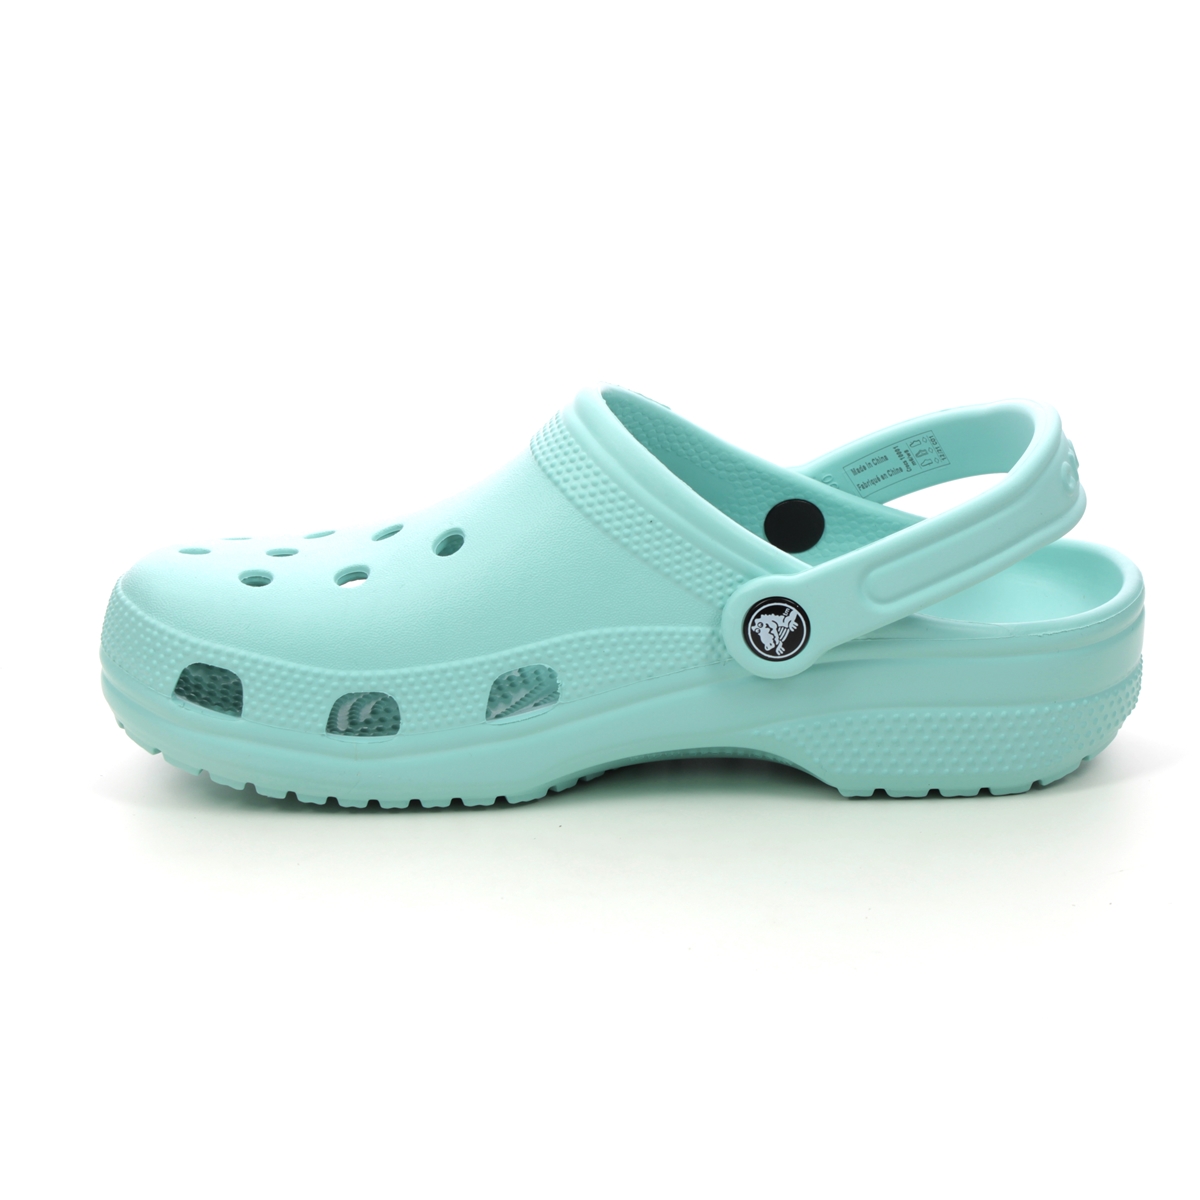 Crocs Classic 10001-4SS Light blue shoes